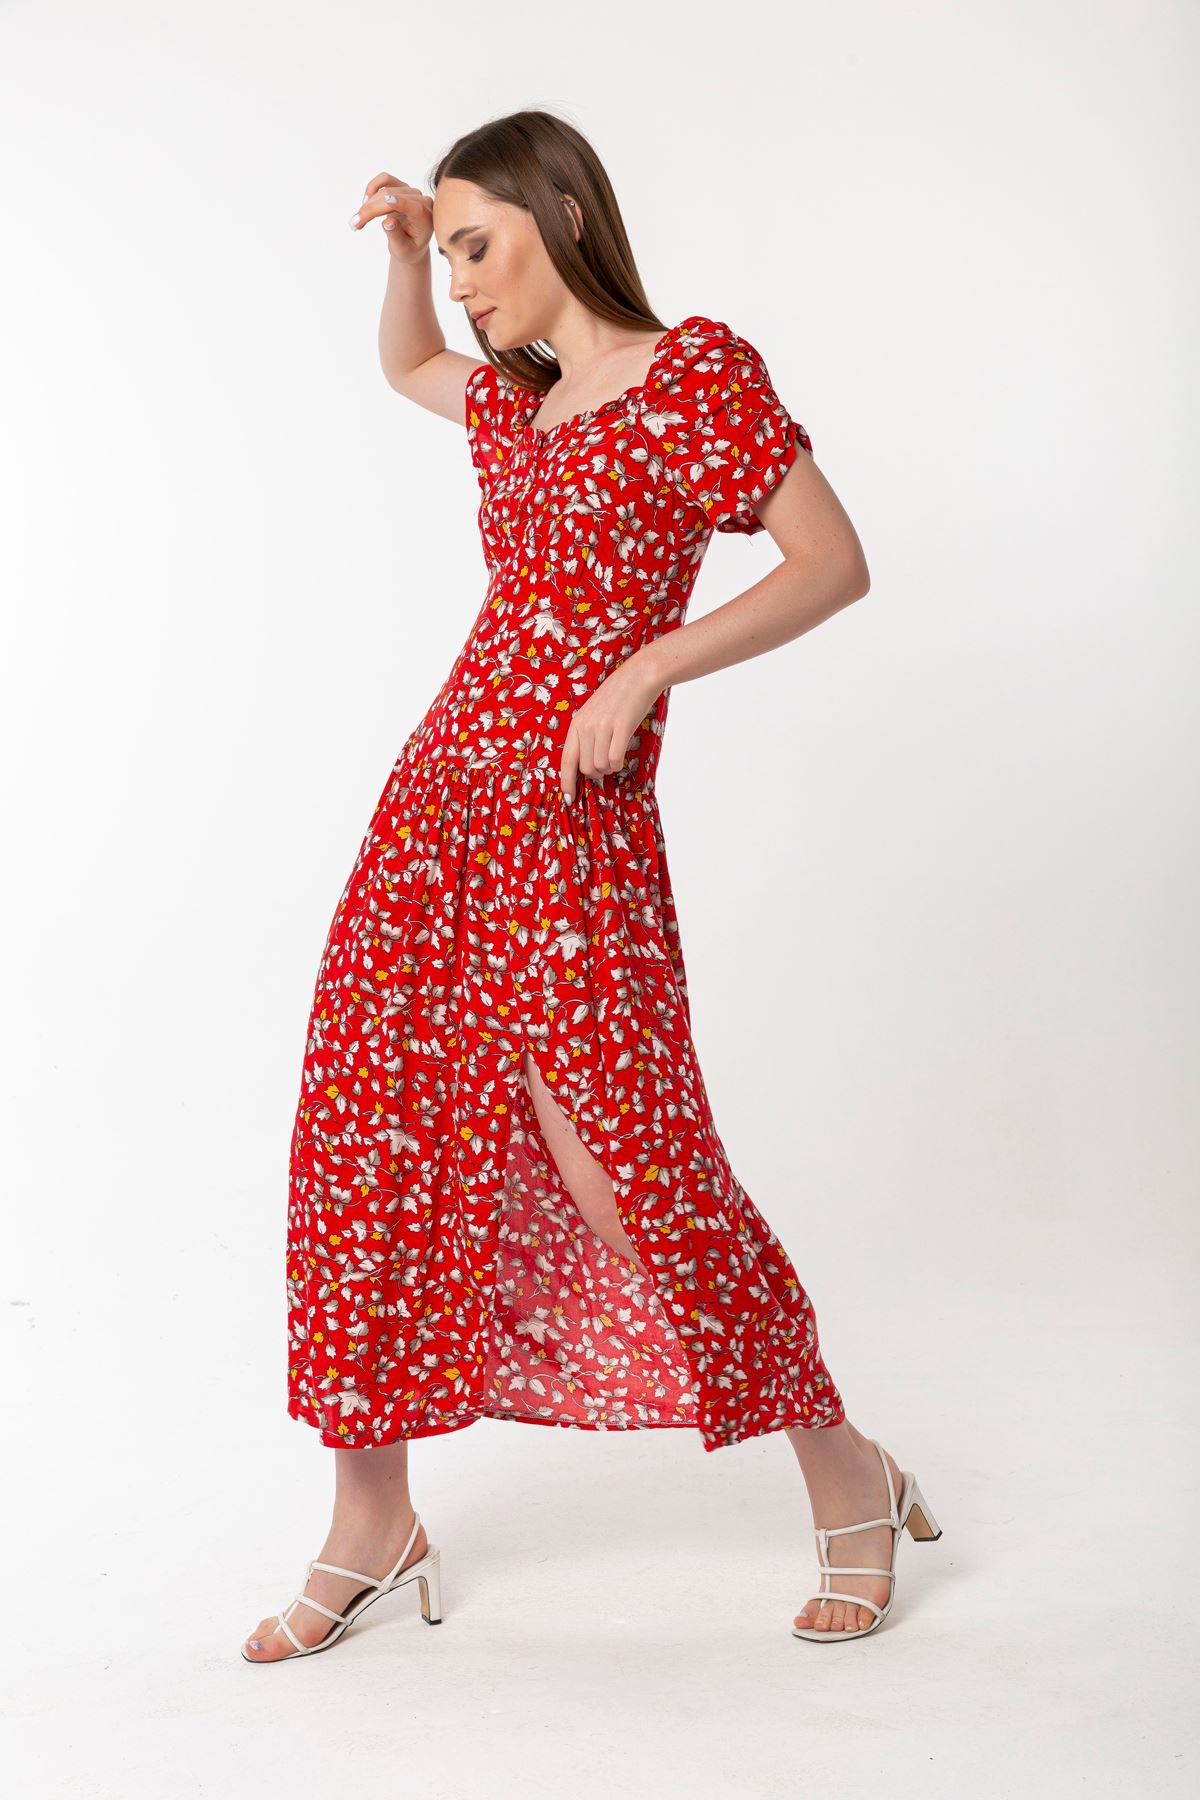 فستان نسائي قماش استيعاب ذراع قصير طوق مربع ميدي قالب مريح نمط زهرة - أحمر